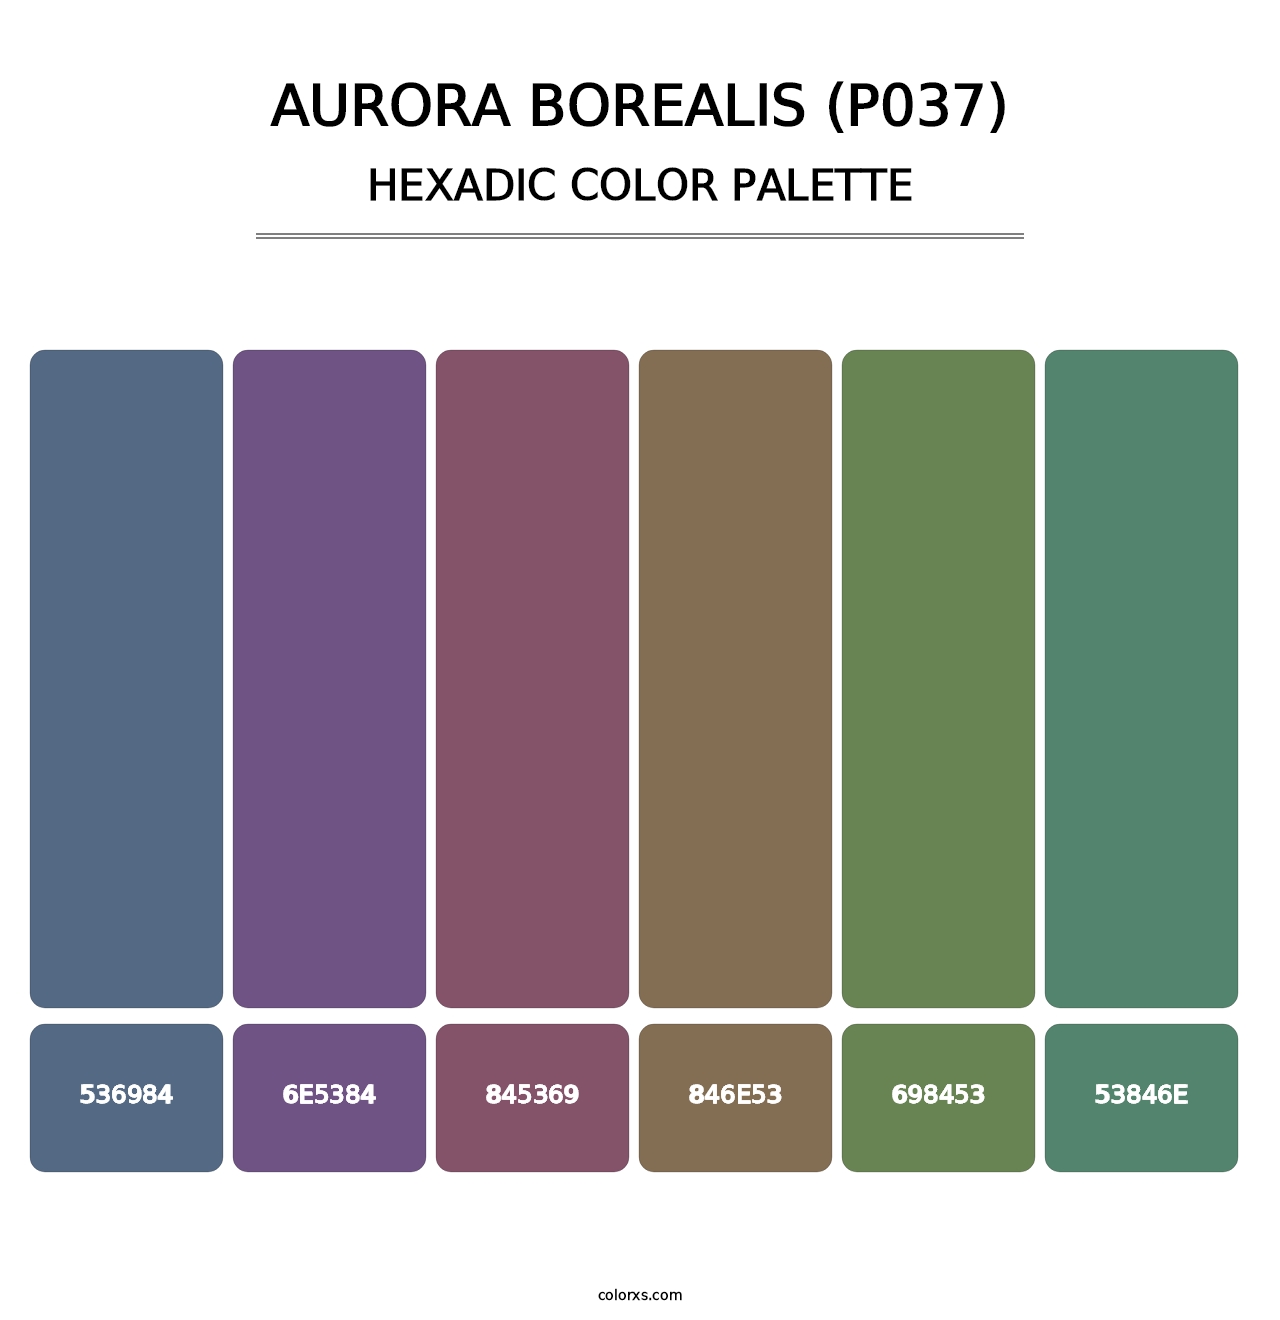 Aurora Borealis (P037) - Hexadic Color Palette